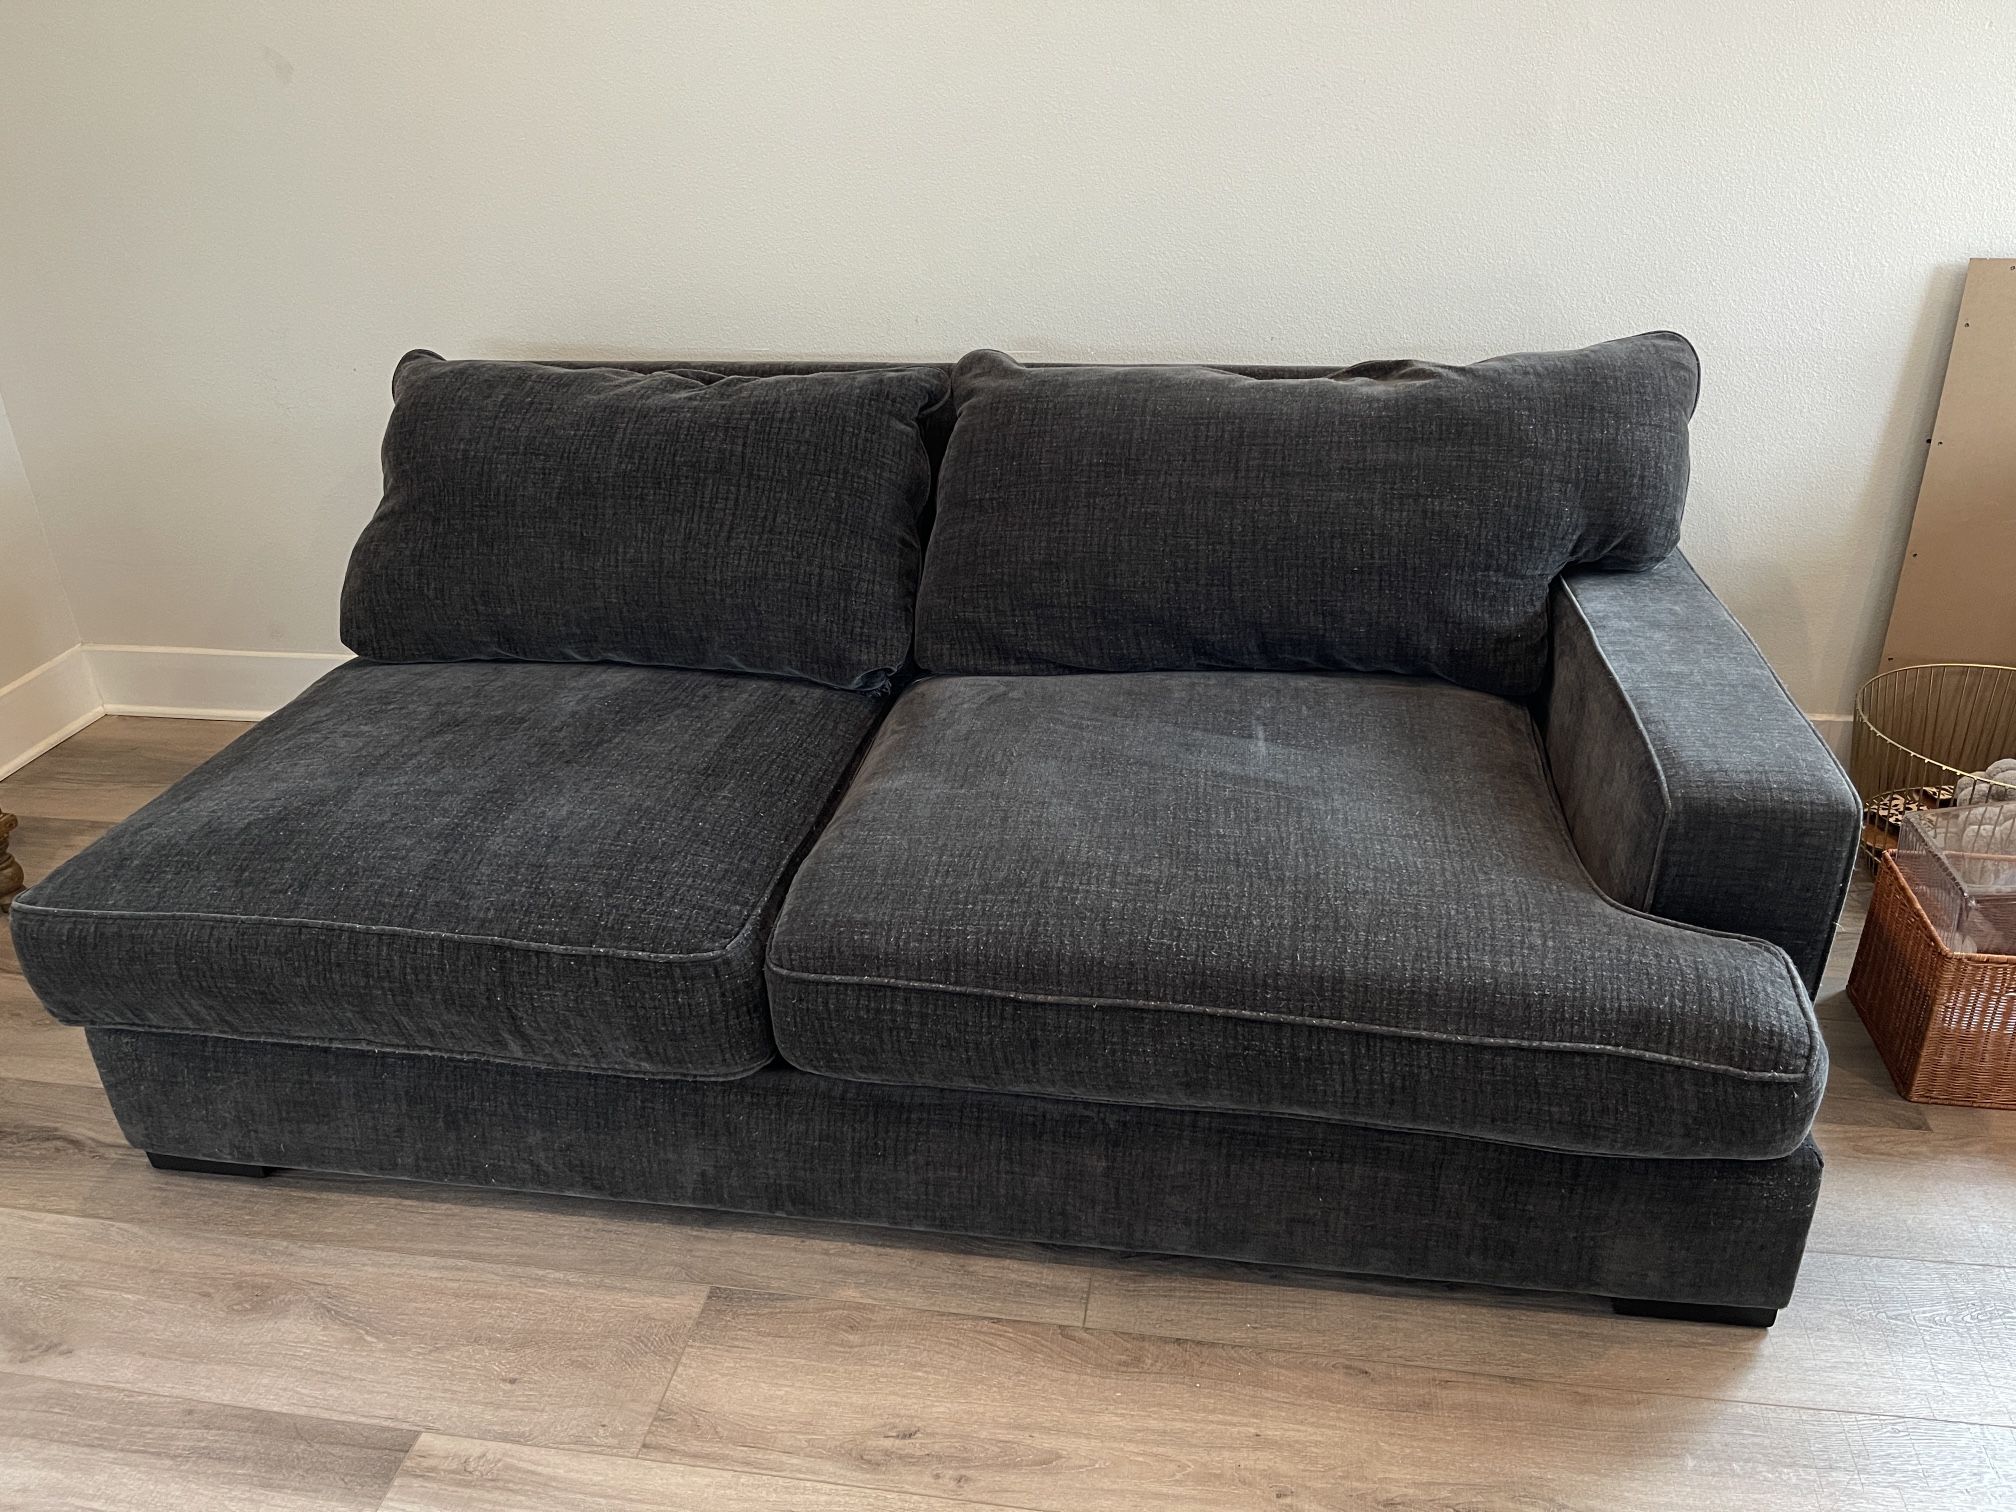 Super Deep Super Comfy Washed Black Couch